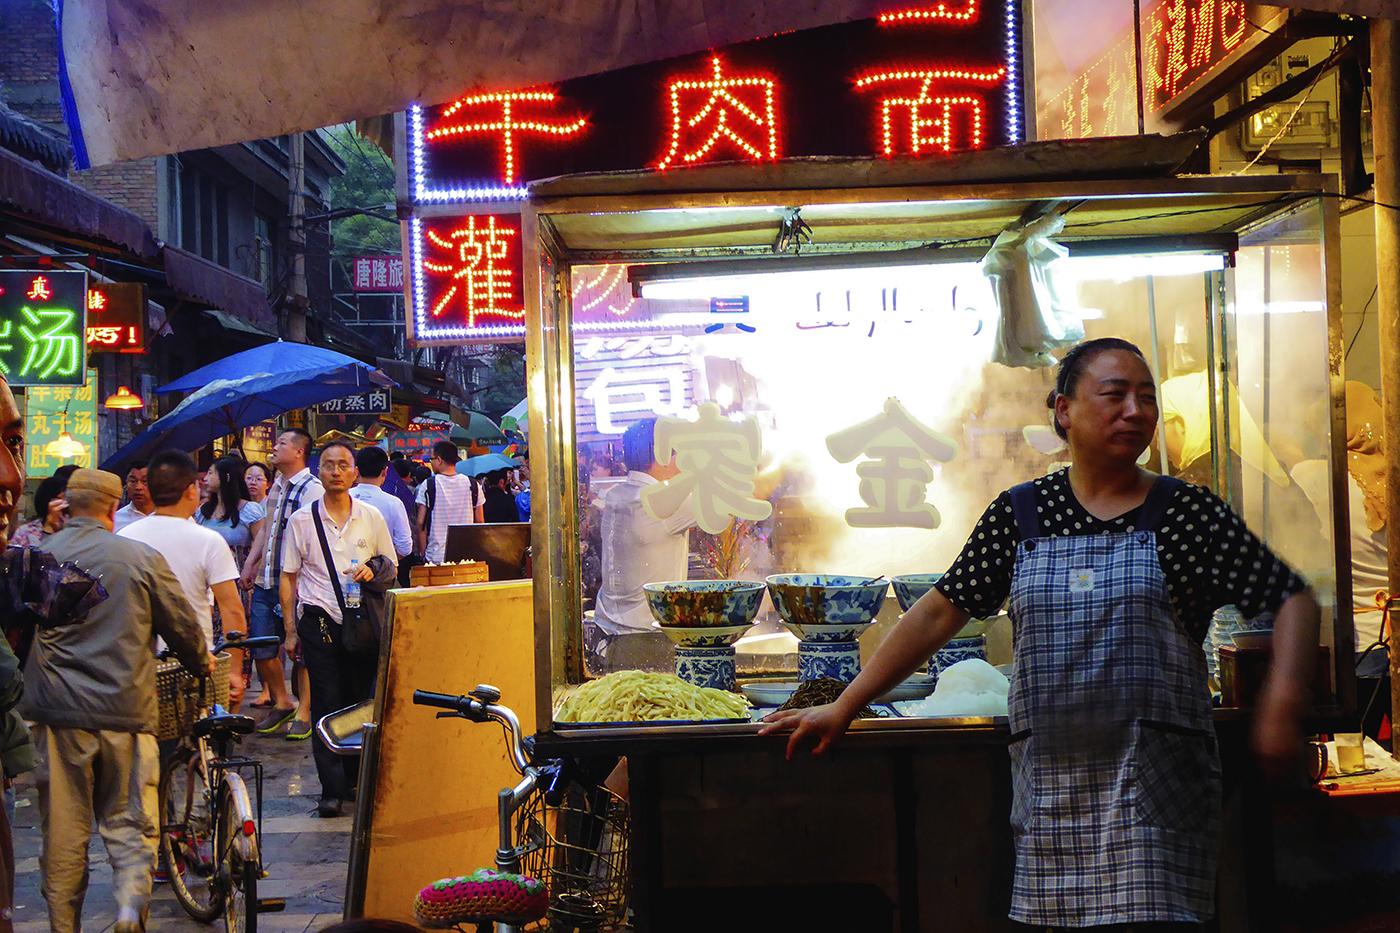 Street scene in Xi'an. Photo: Mick Duffield